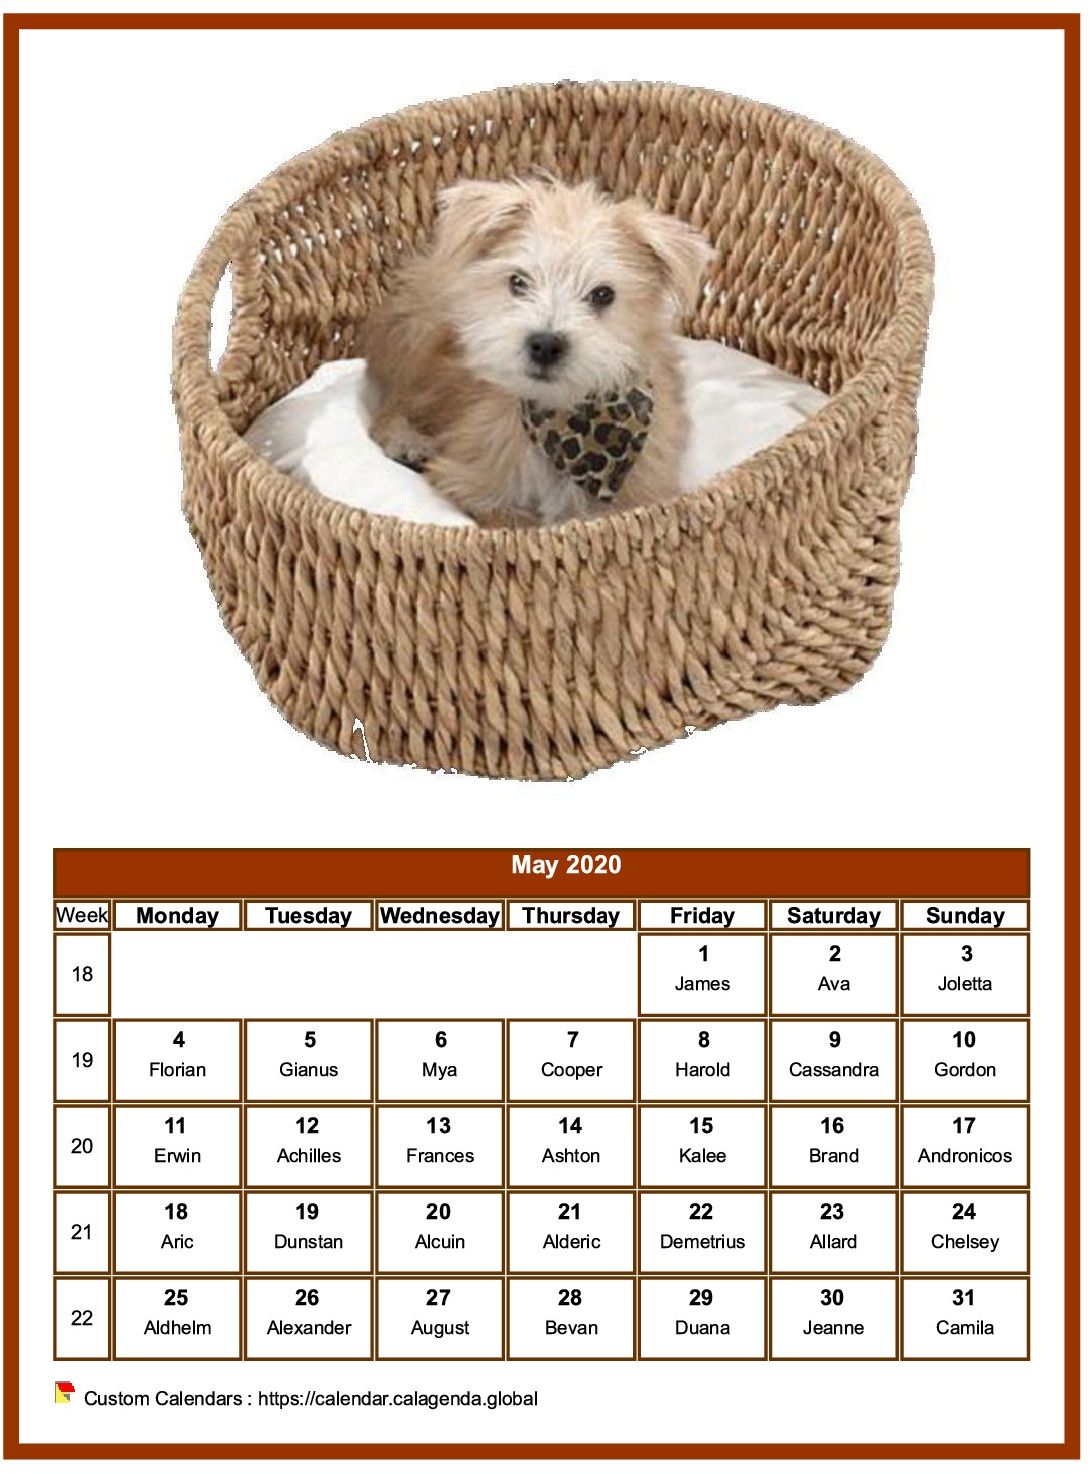 Calendar May 2020 dogs